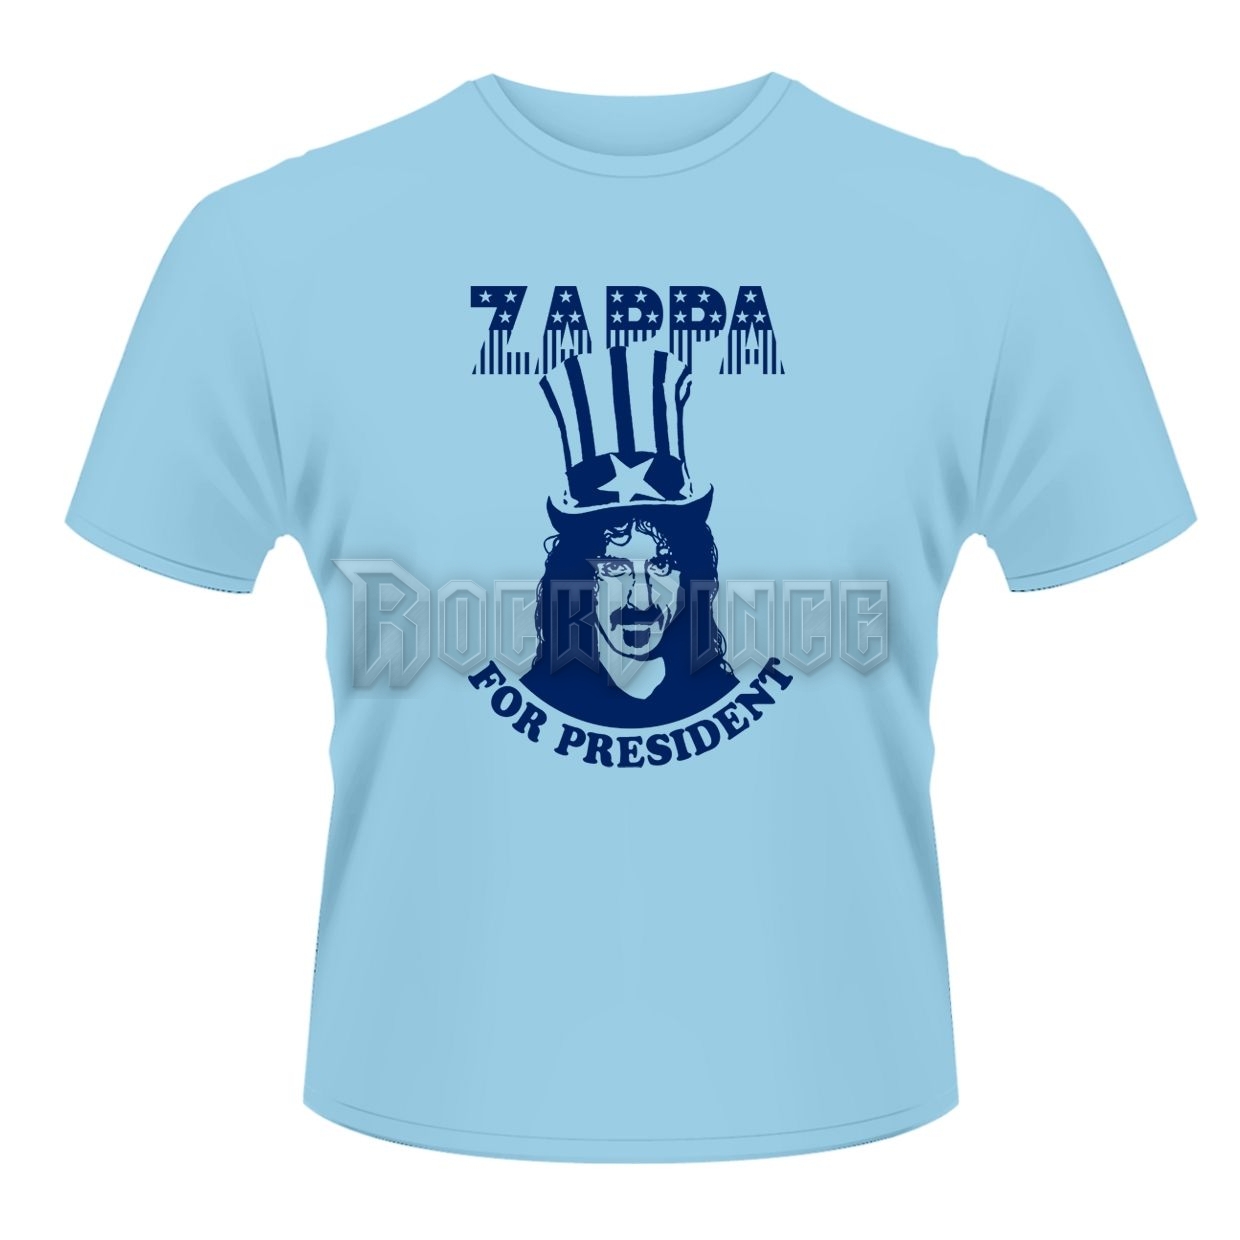 FRANK ZAPPA - ZAPPA FOR PRESIDENT (BLUE) - PH7118